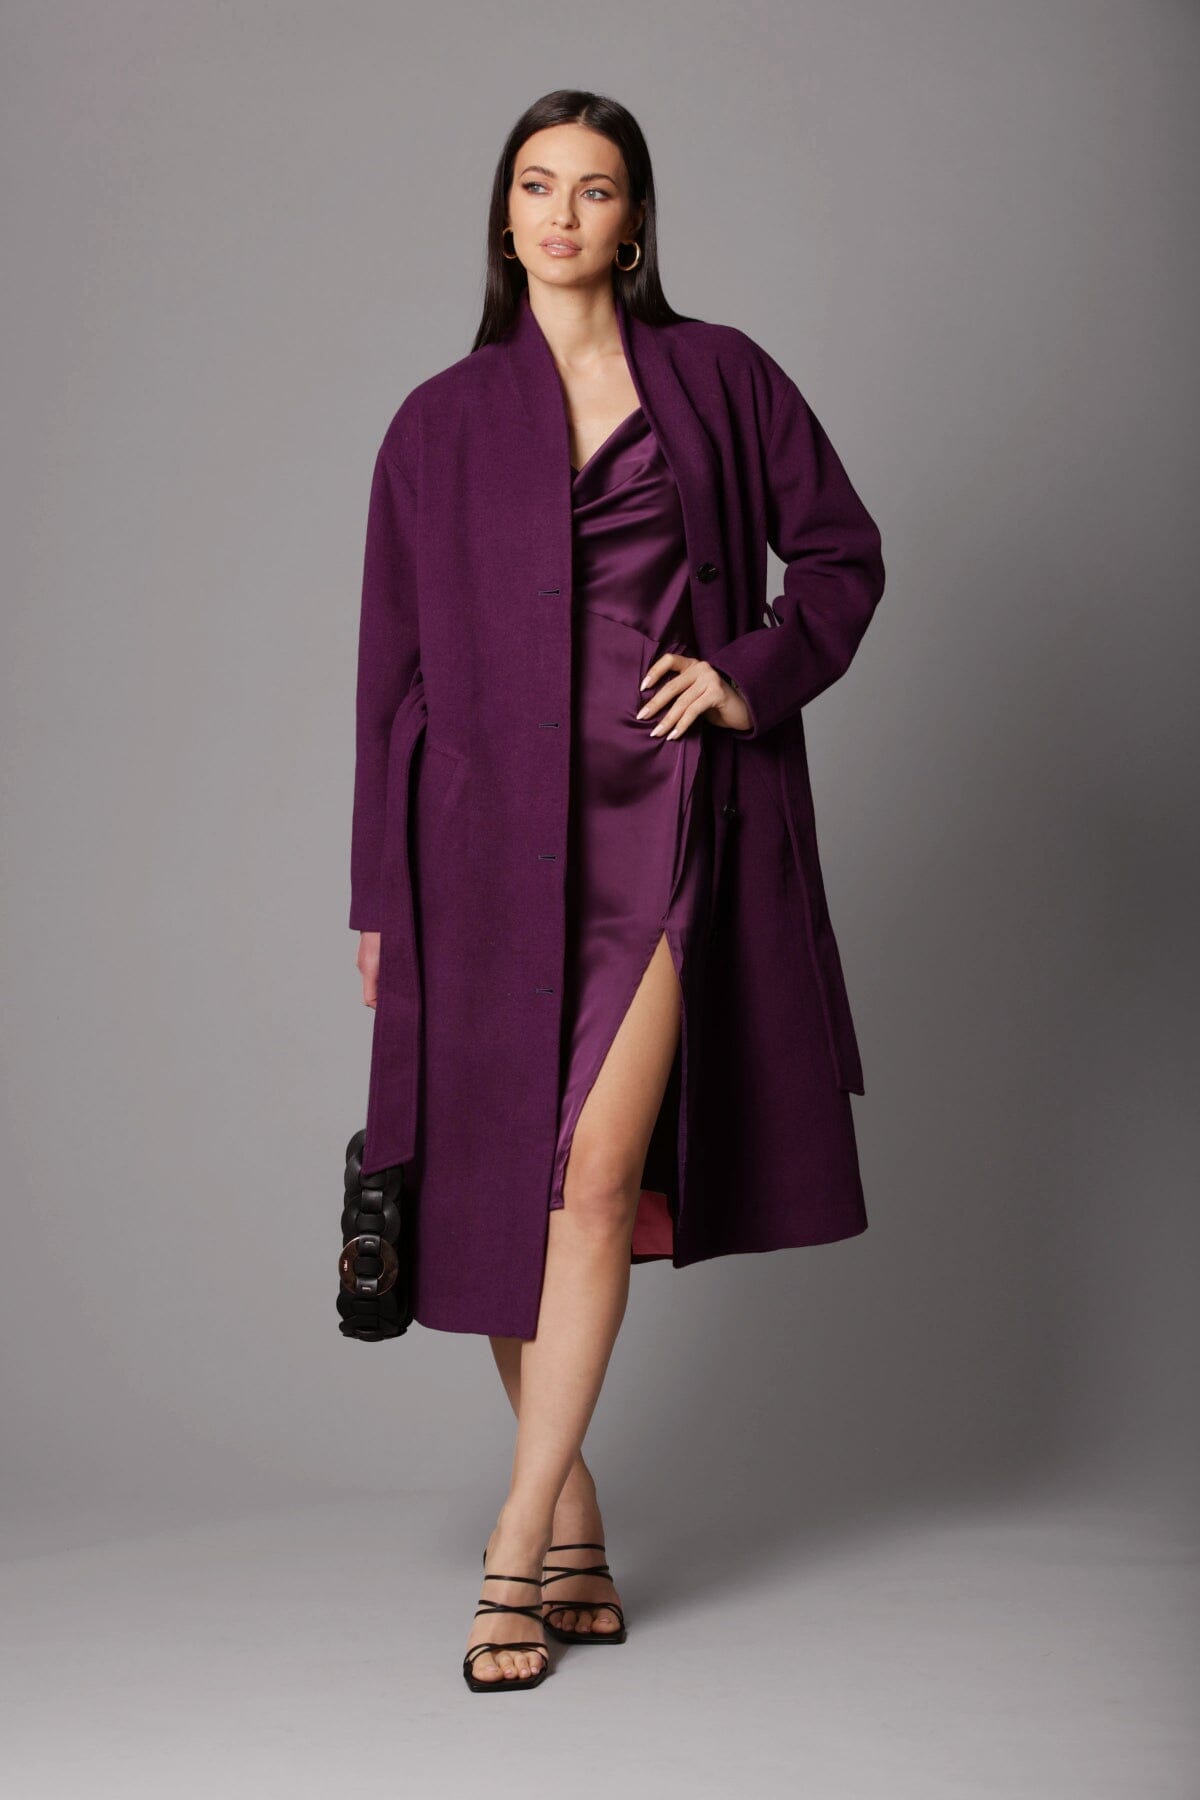 Aubergine purple wool blend overlap collar long coat jacket - women's figure flattering day to night outerwear for fall